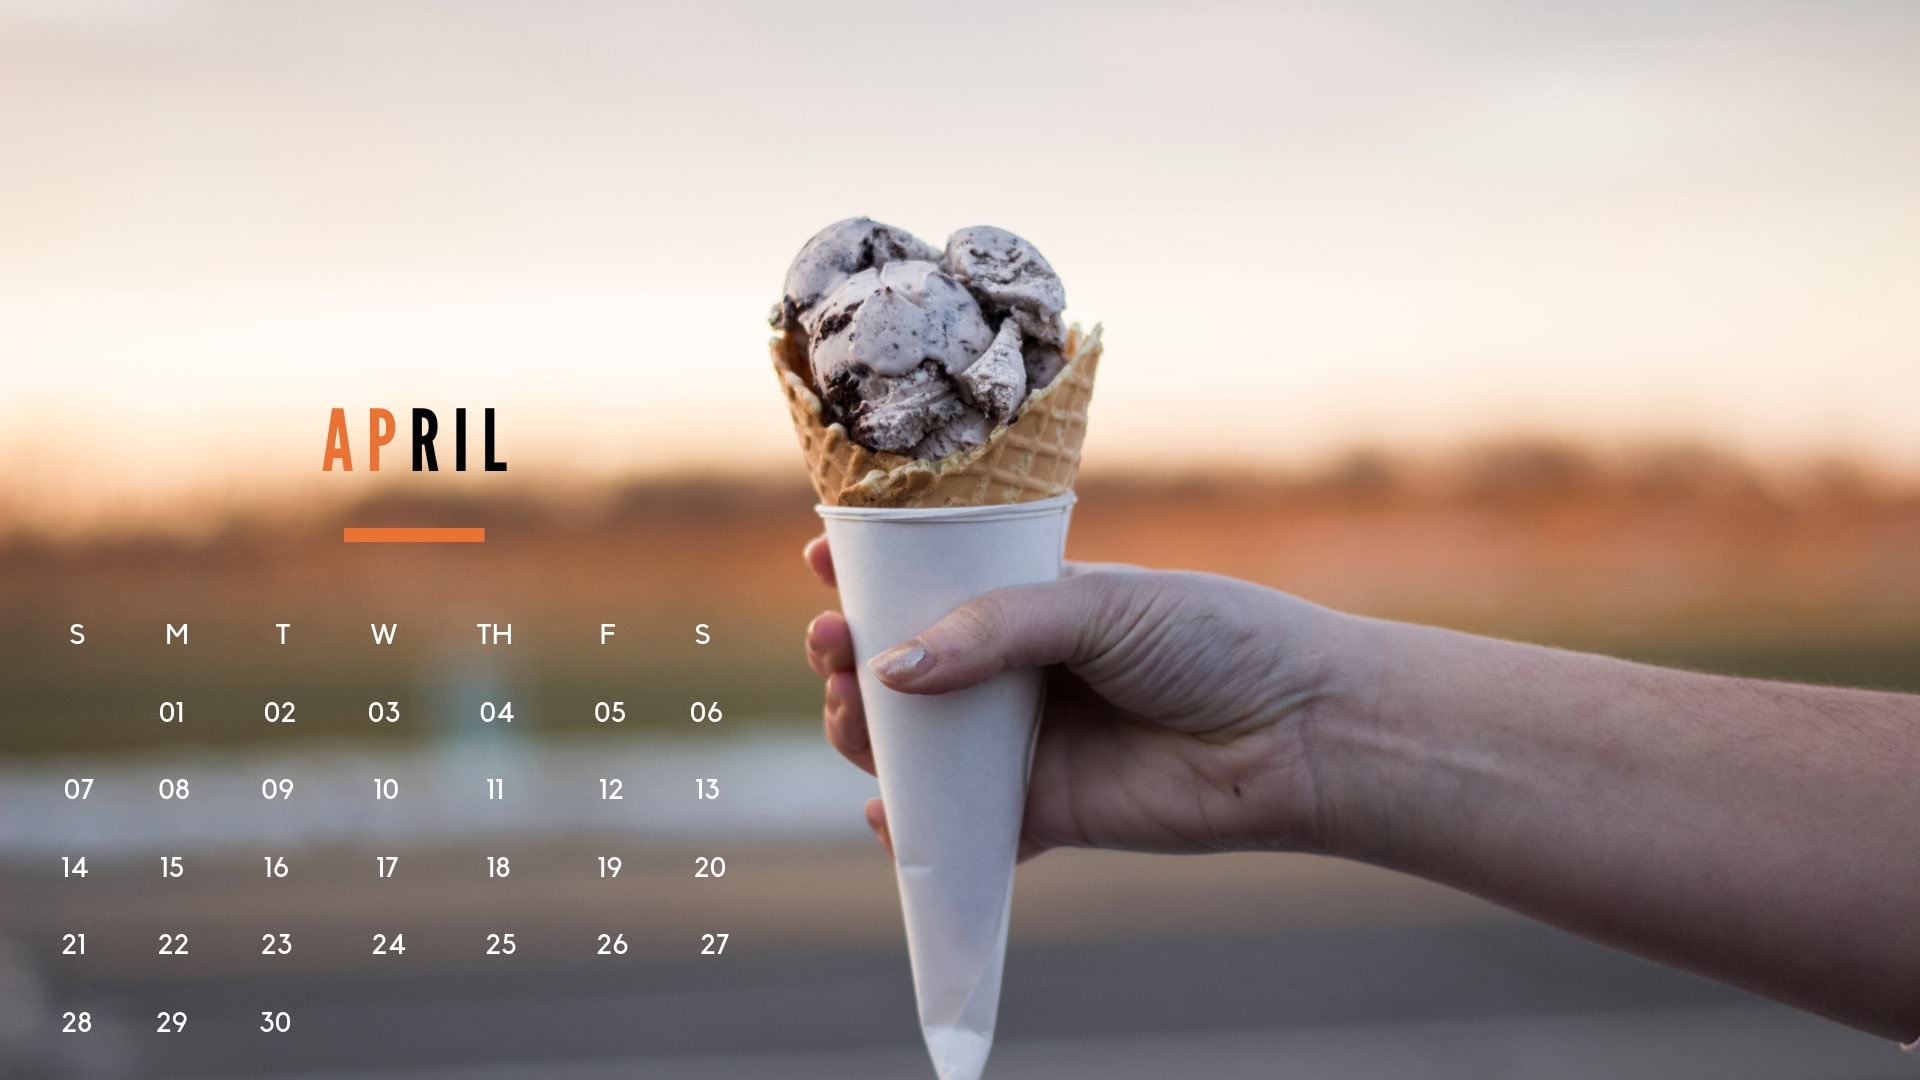 Latest April 2019 Calendar Wallpaper   Album on Imgur